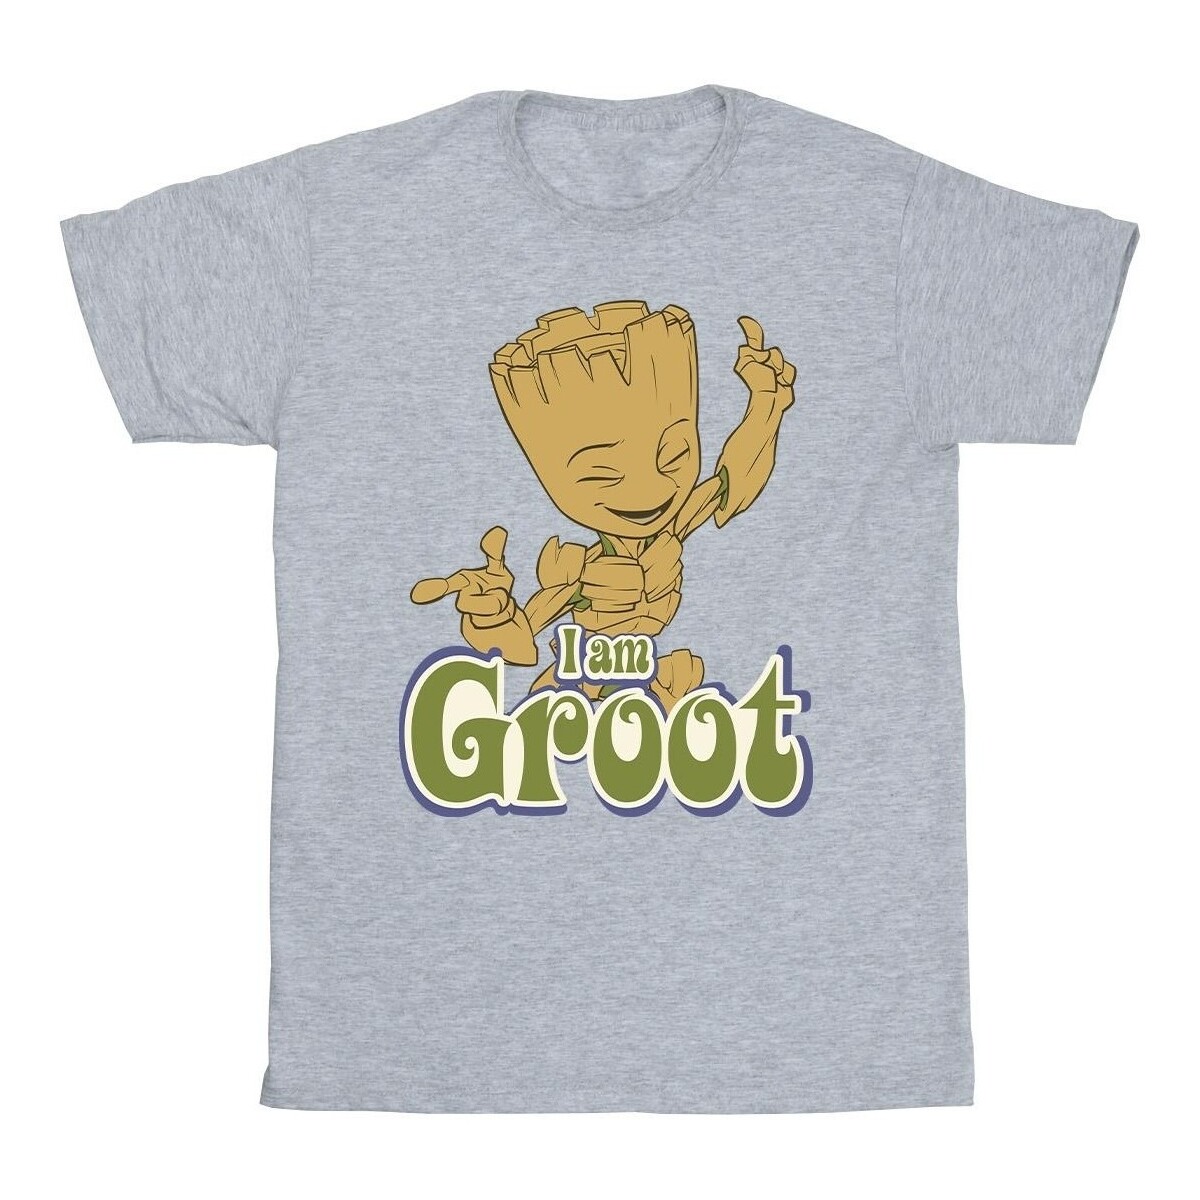 Vêtements Garçon T-shirts manches courtes Guardians Of The Galaxy Groot Dancing Gris